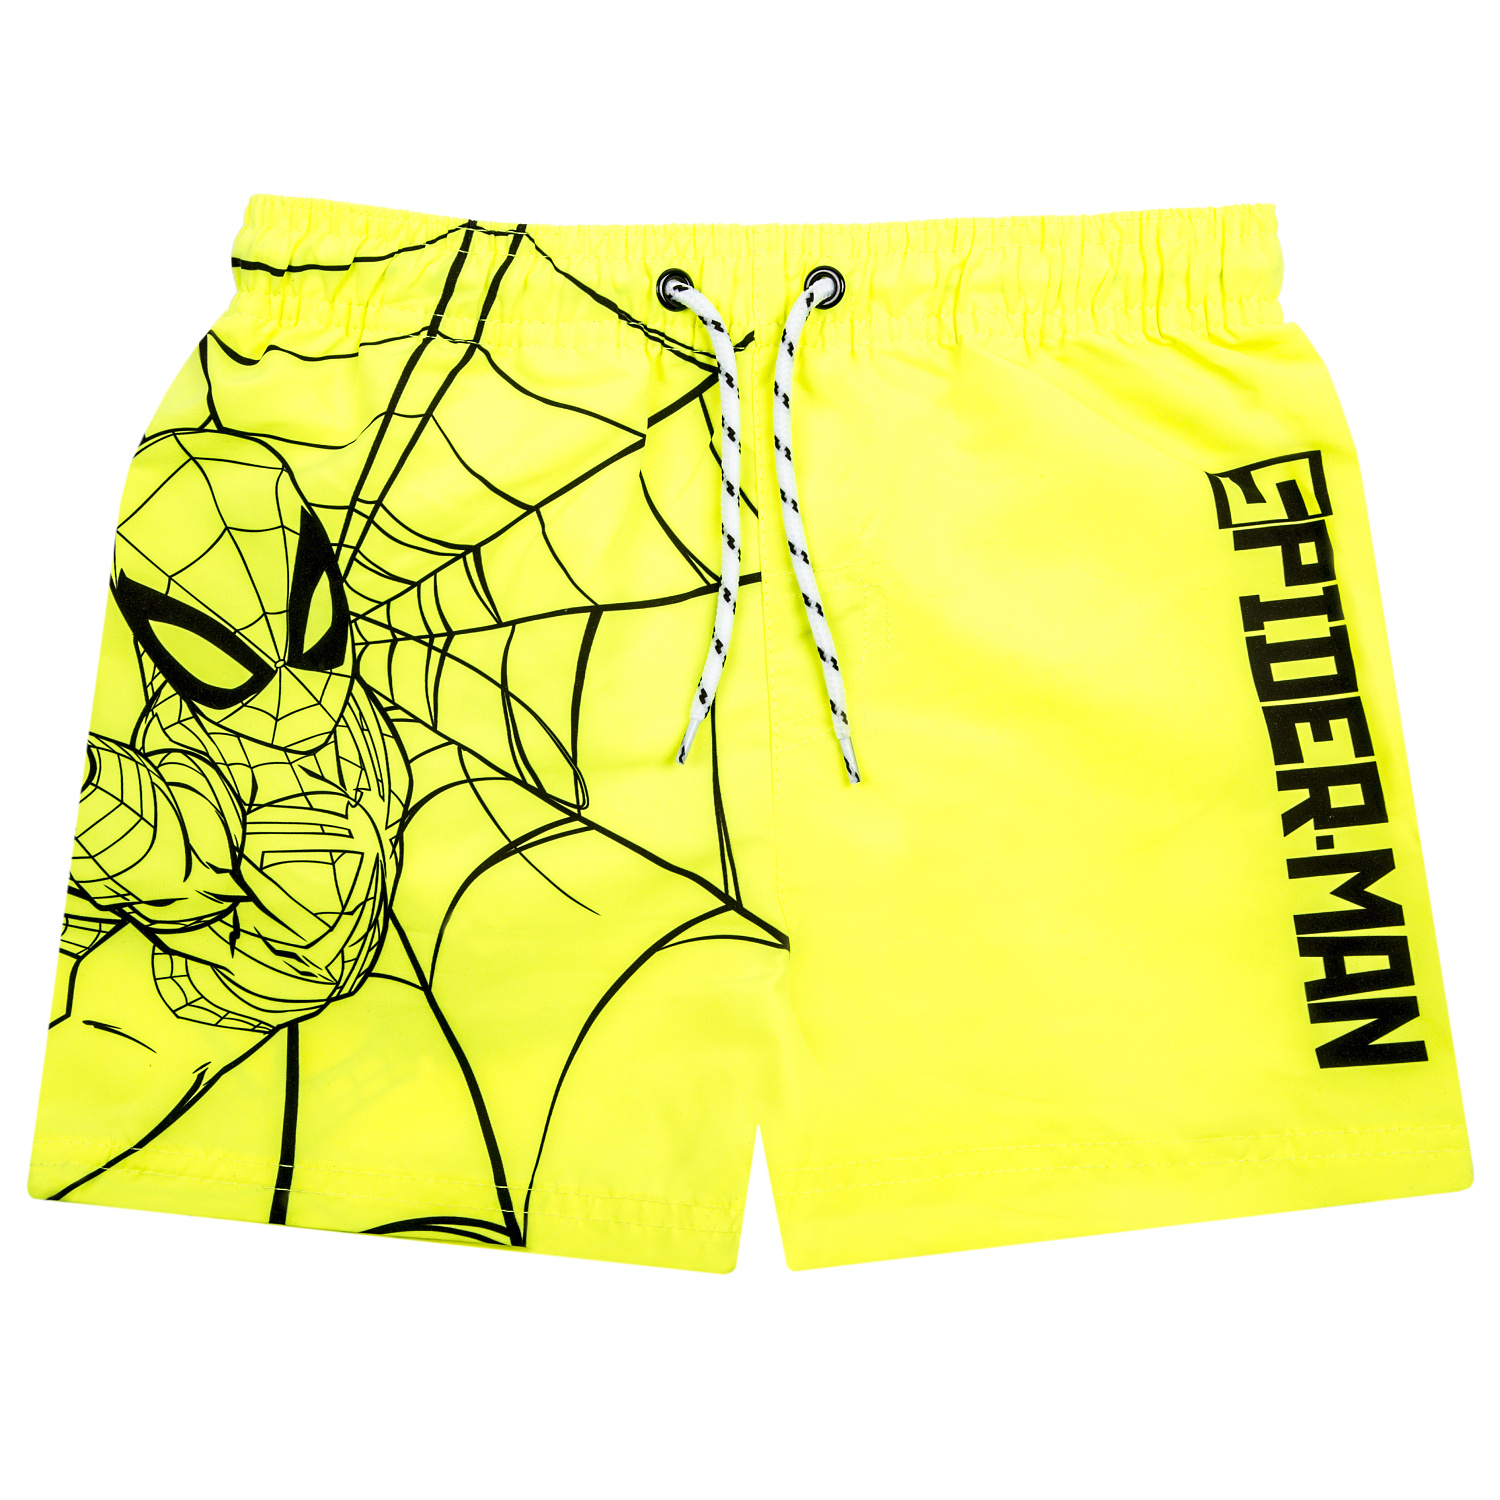 Spider Man - licence Chlapecké koupací kraťasy - Spider-Man UE1883, žlutá Barva: Žlutá, 